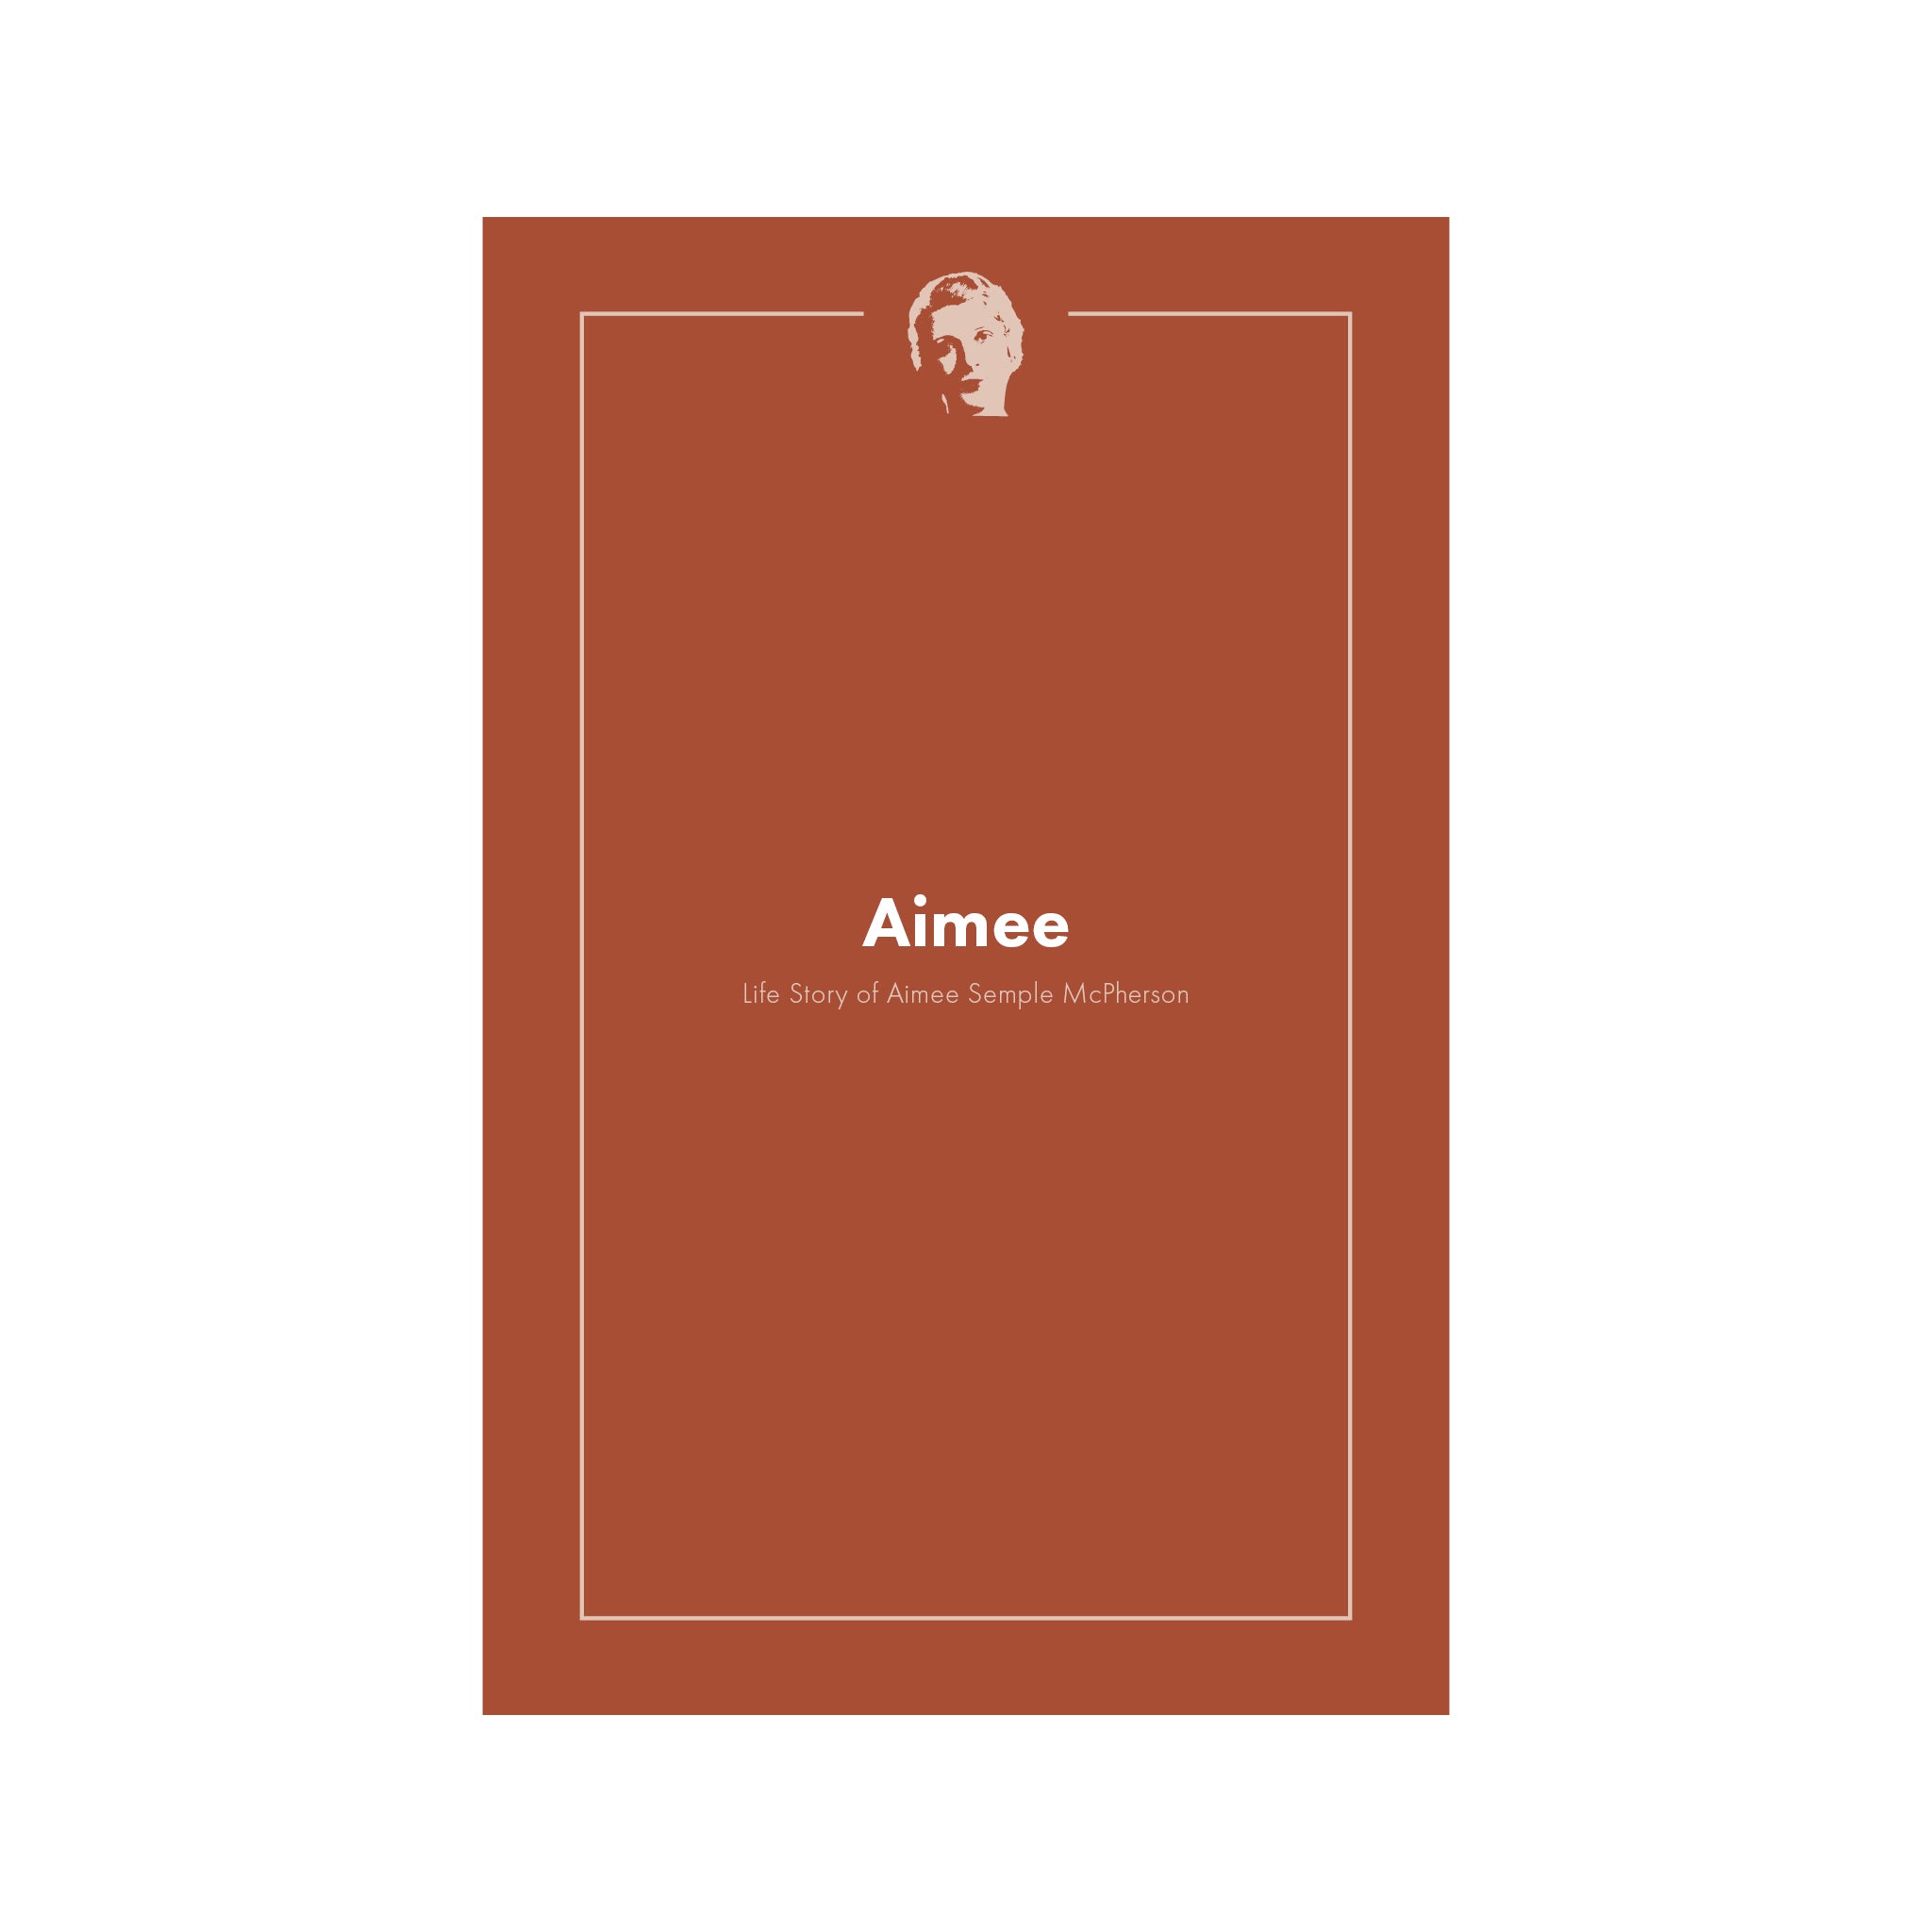 Aimee: Life Story of Aimee Semple McPherson